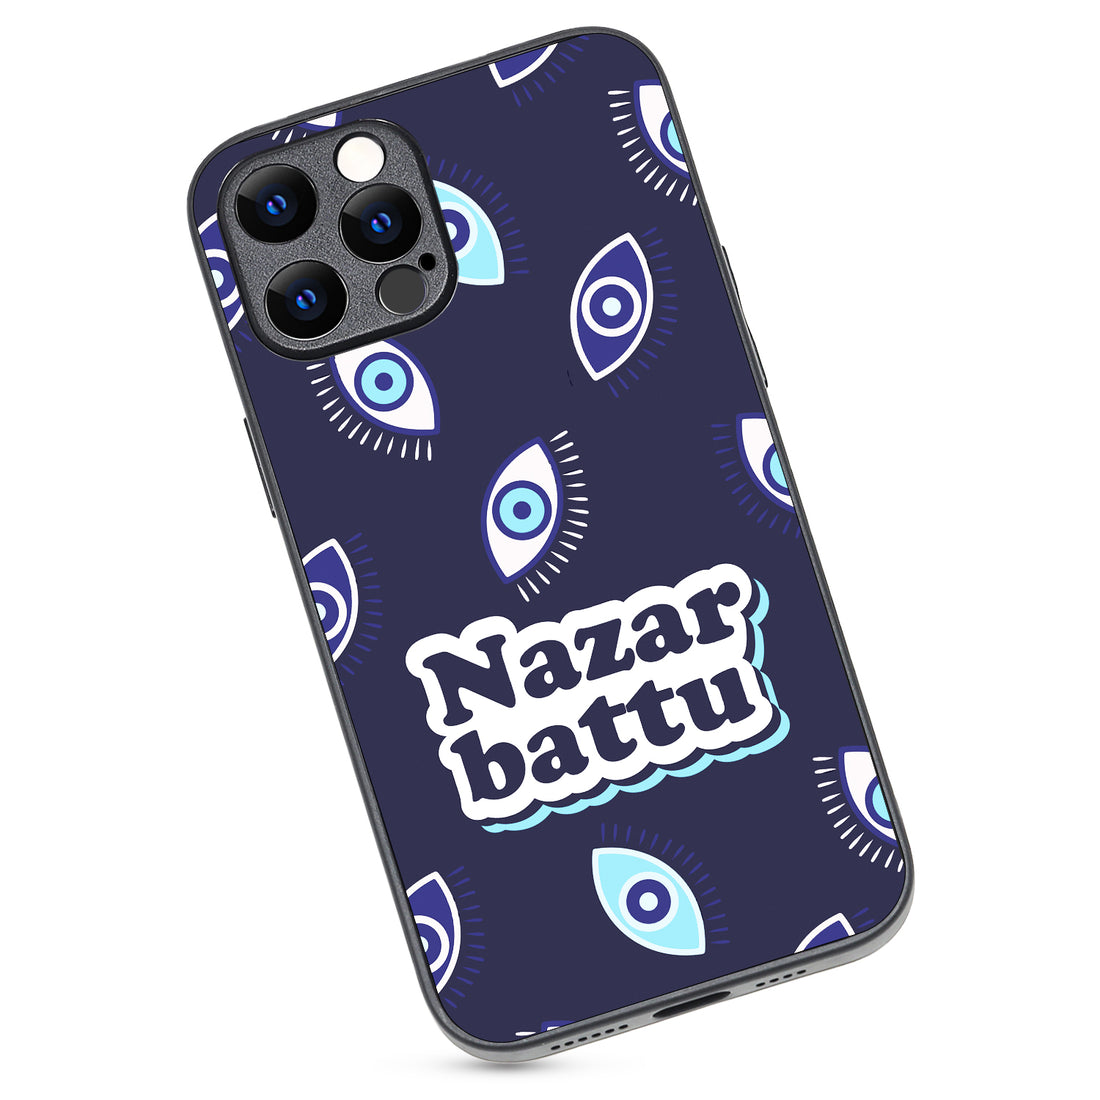 Nazar Battu Motivational Quotes iPhone 12 Pro Max Case